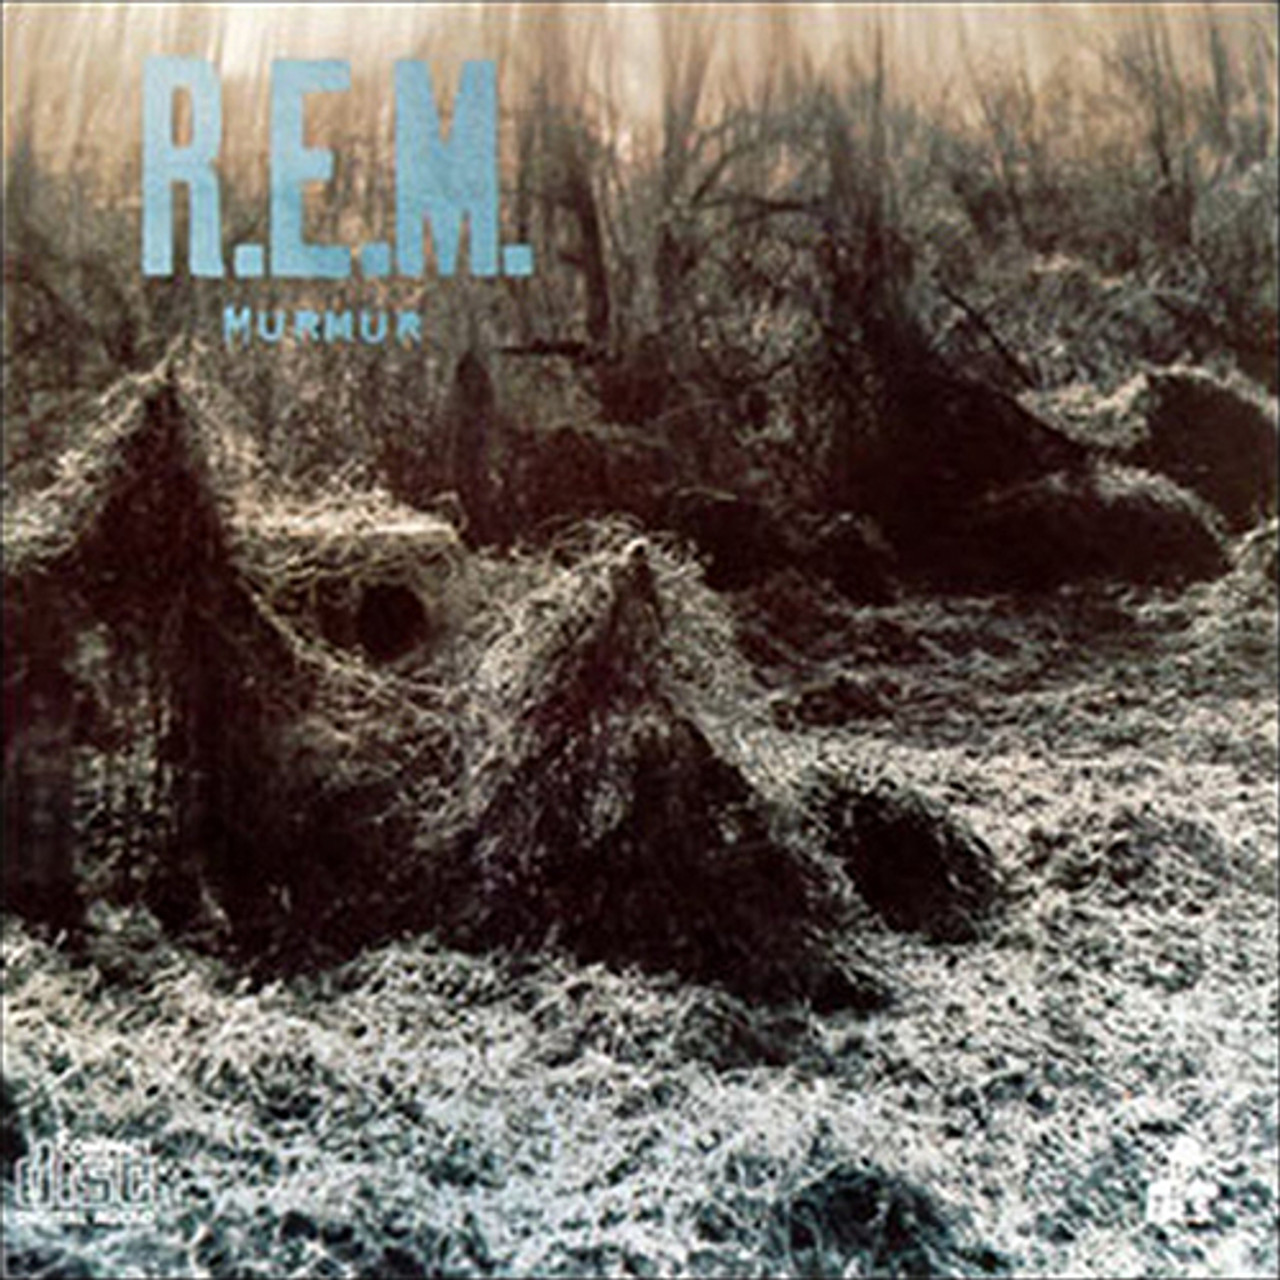 R.E.M. - Murmur (180g Vinyl LP) - Music Direct